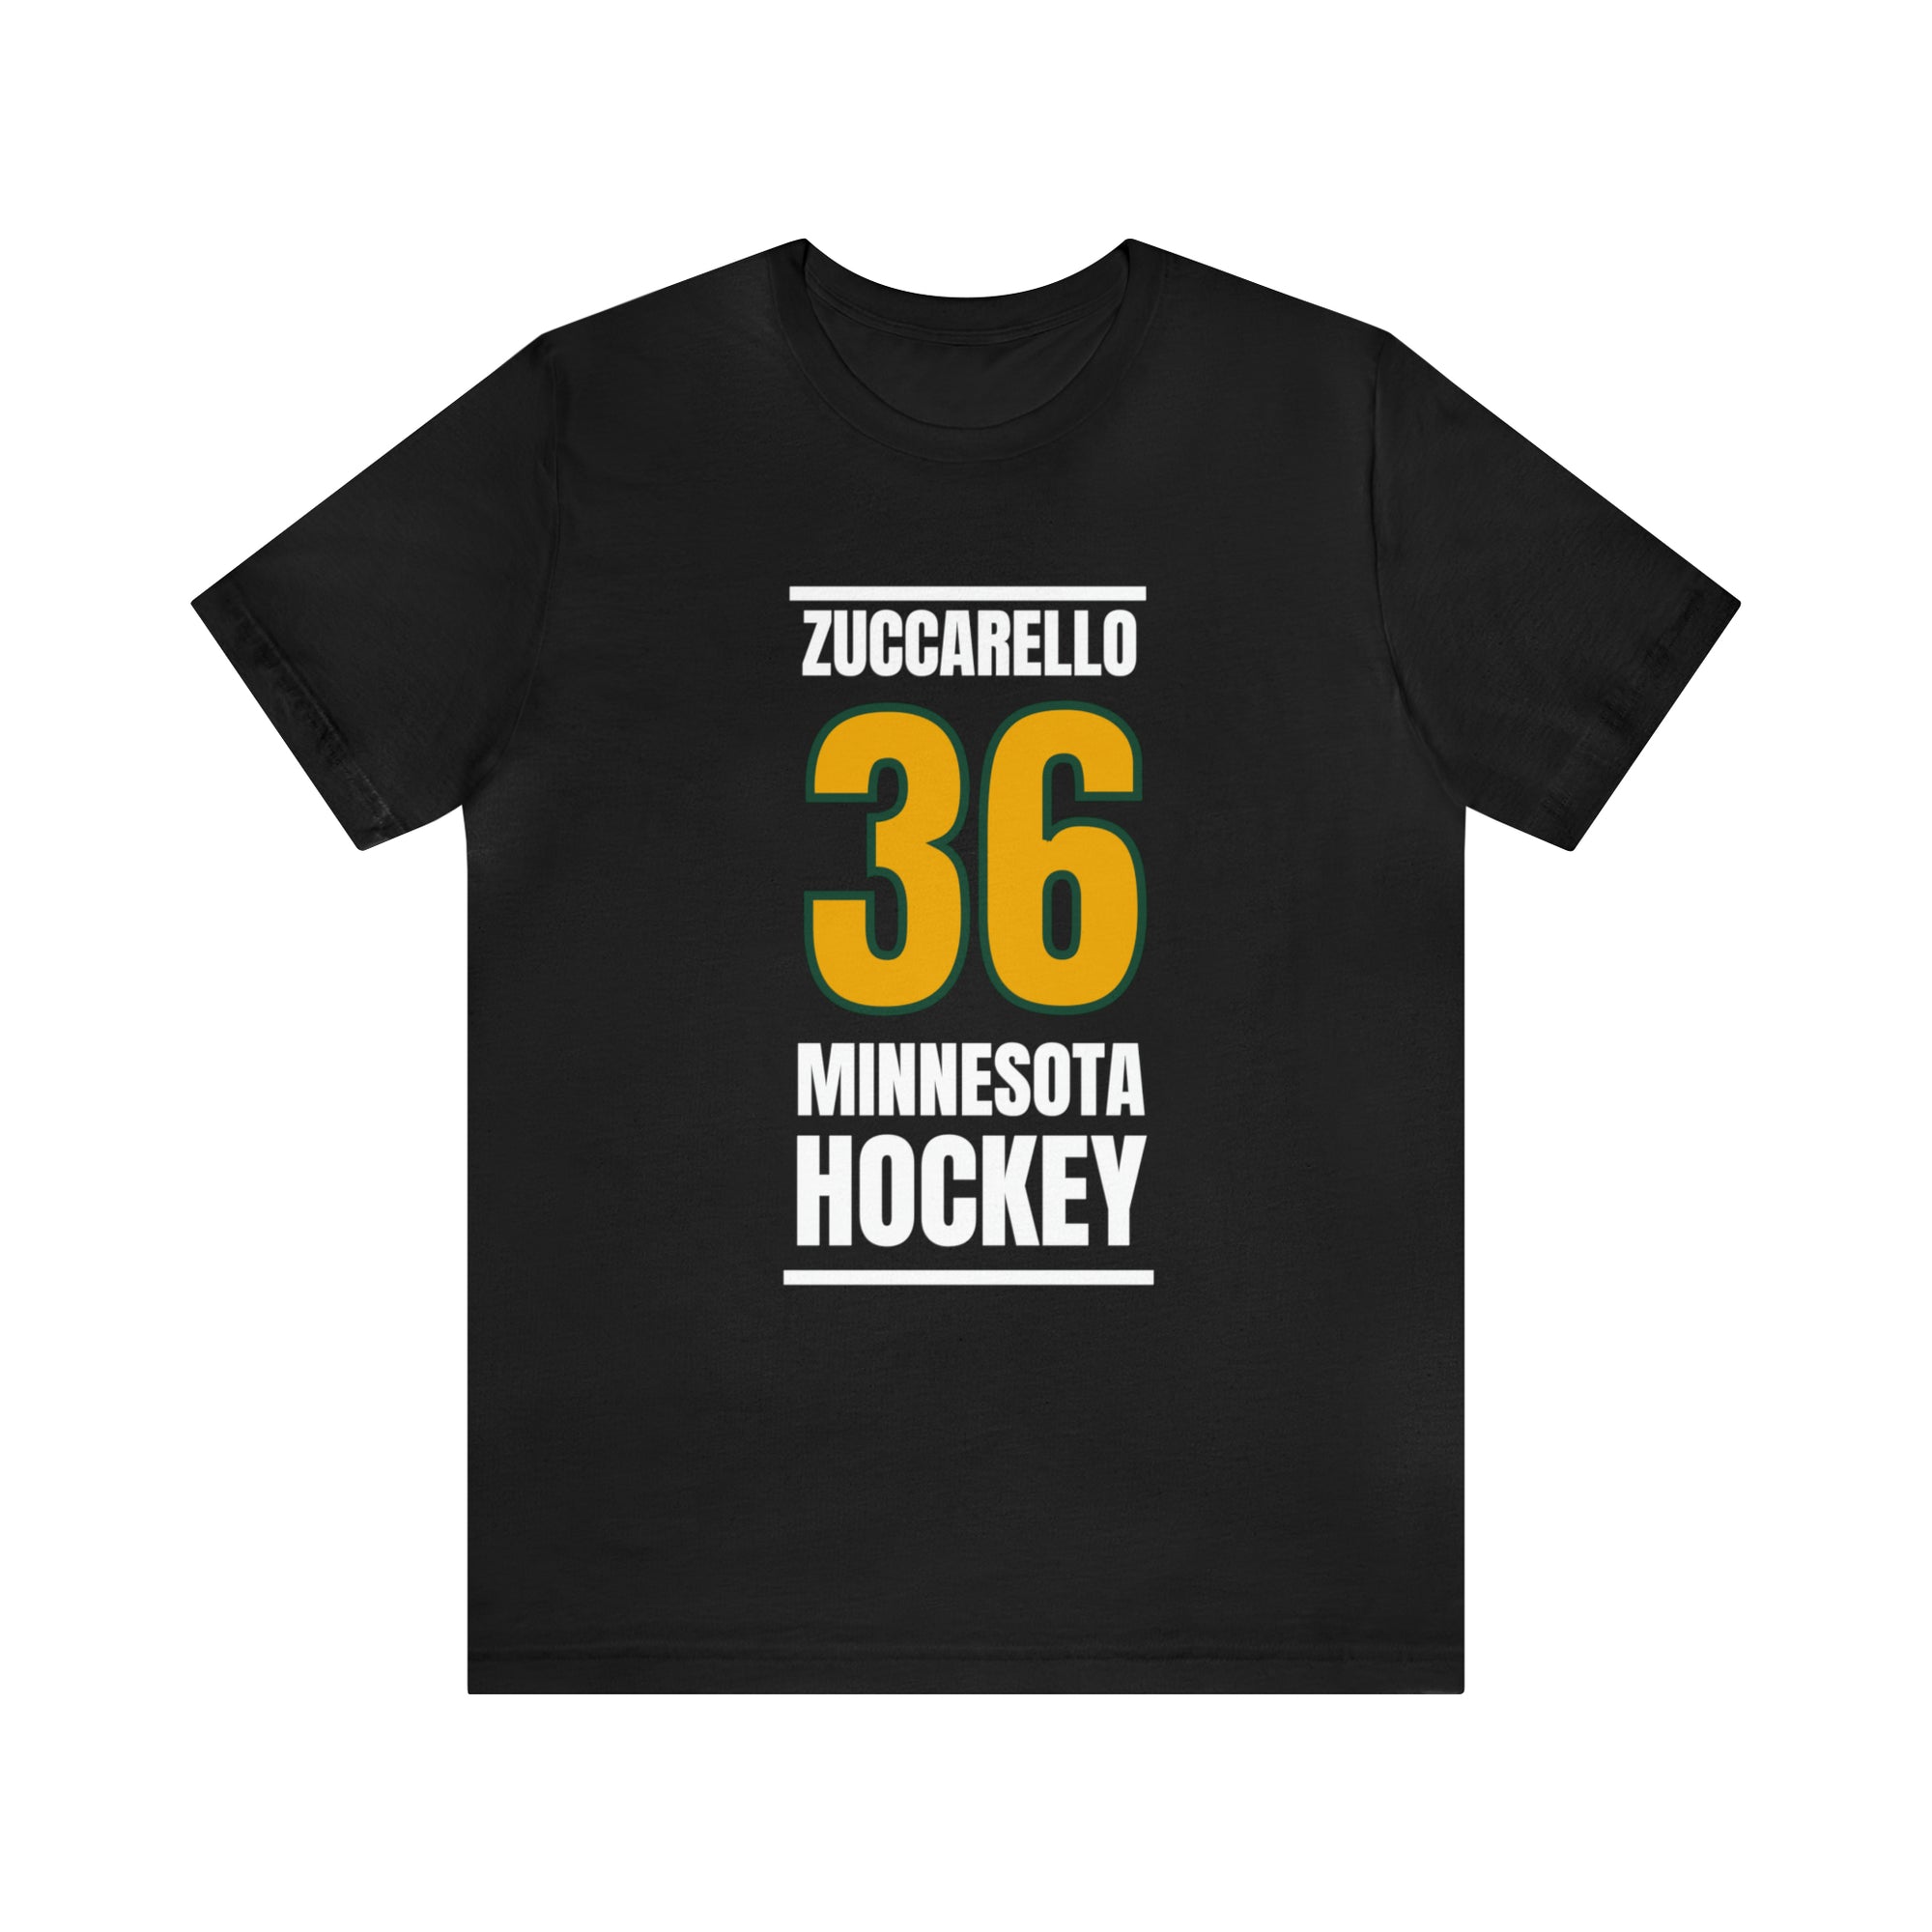 Zuccarello 36 Minnesota Hockey Gold Vertical Design Unisex T-Shirt